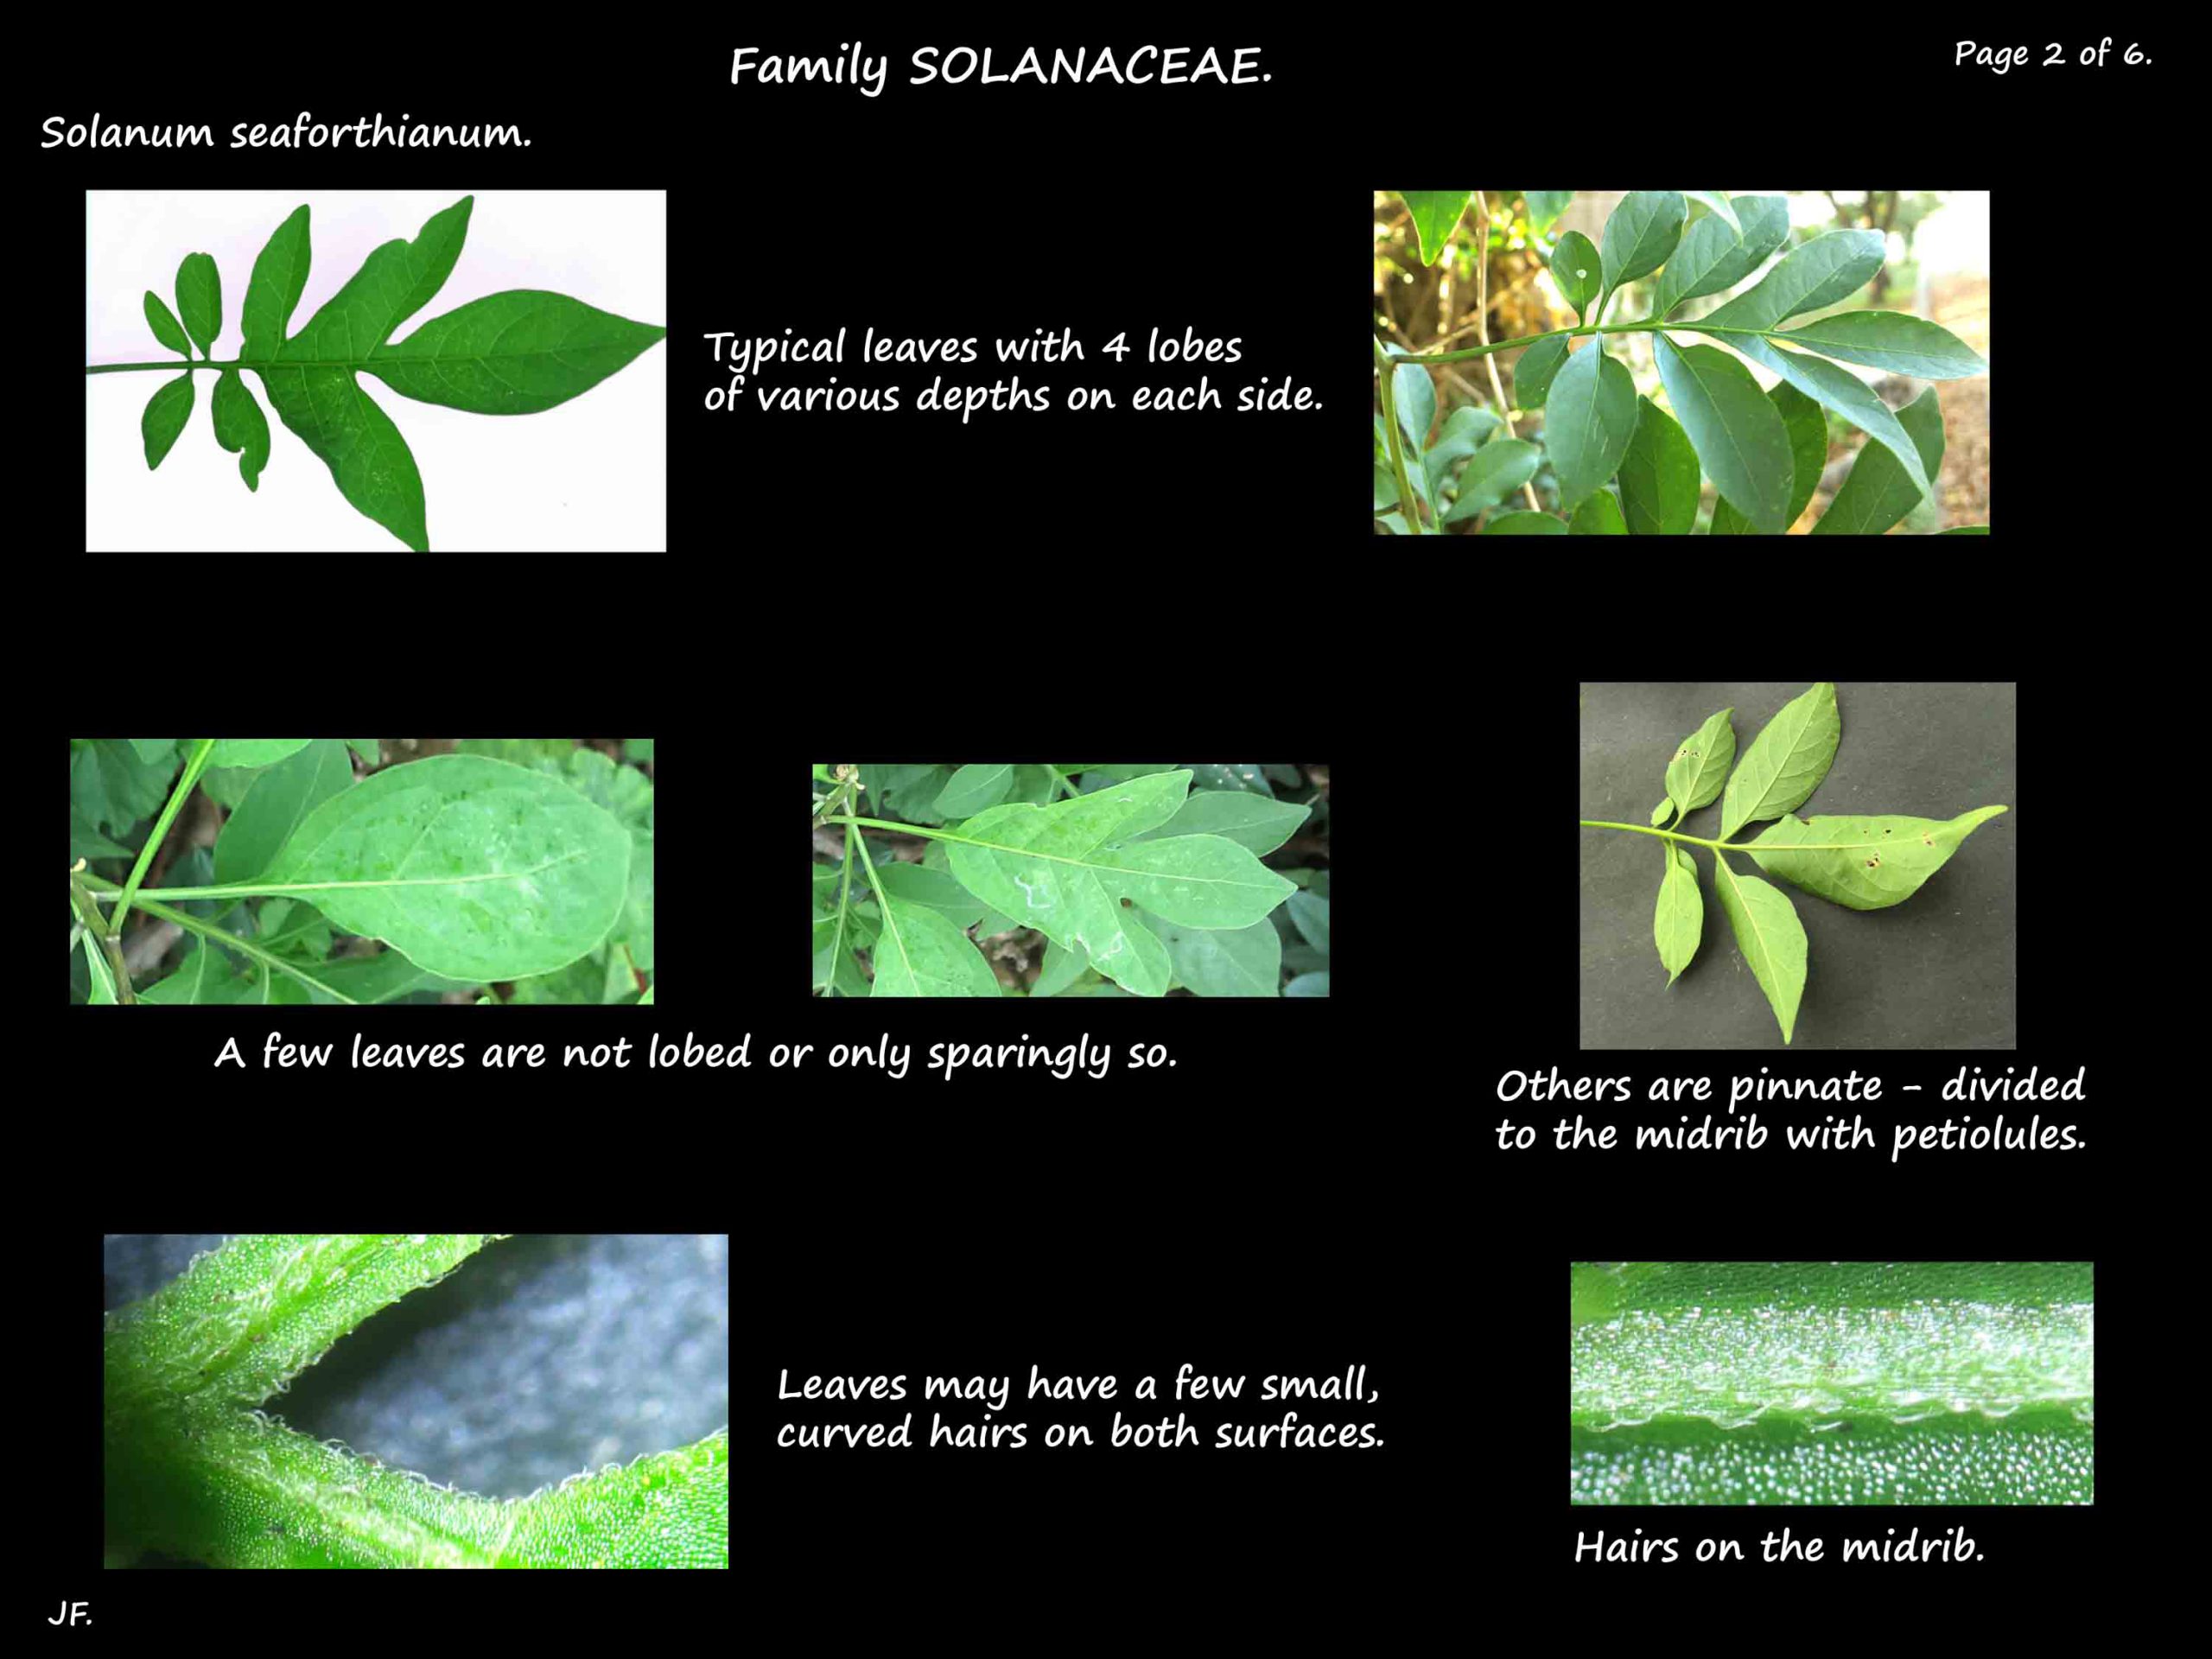 2 Solanum seaforthianum leaves